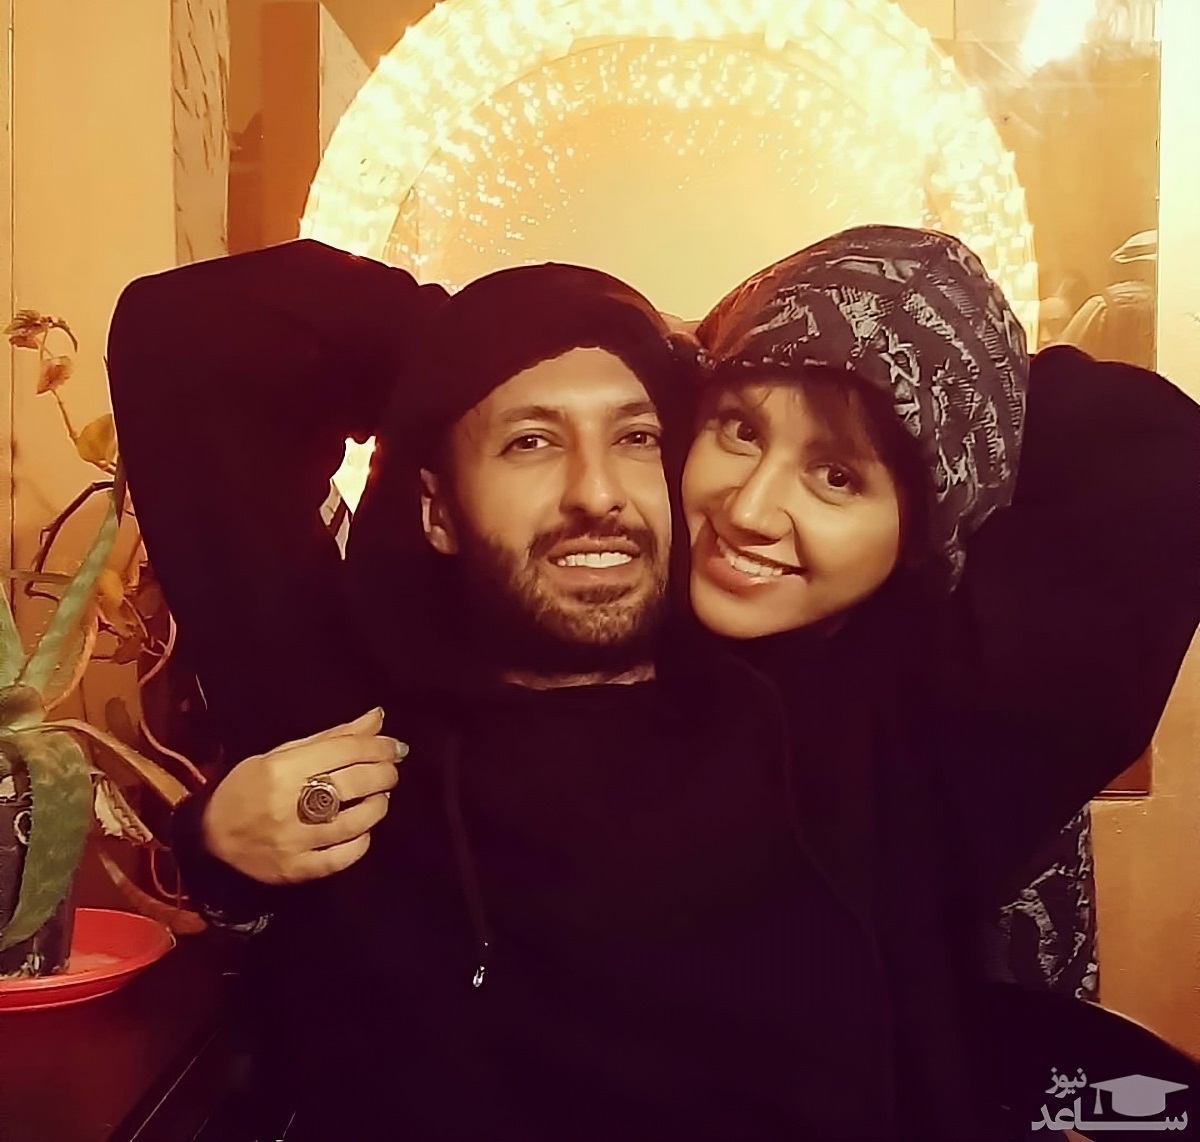 حسام محمودی2: حسام و همسرش